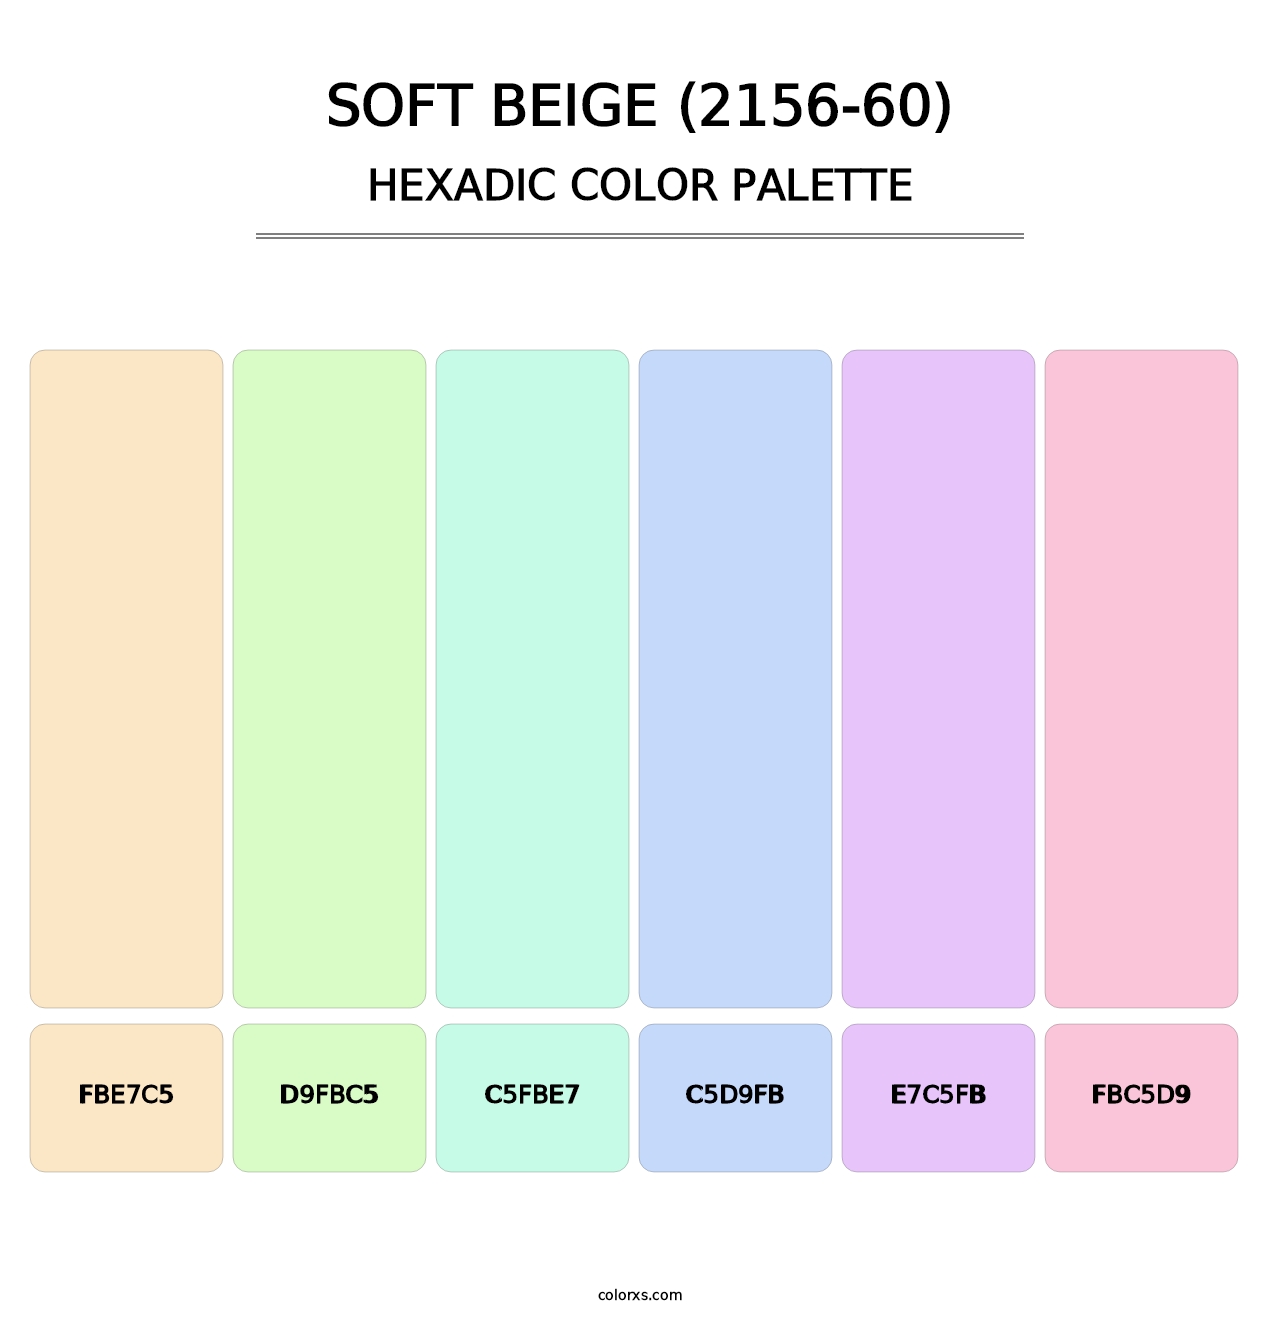 Soft Beige (2156-60) - Hexadic Color Palette